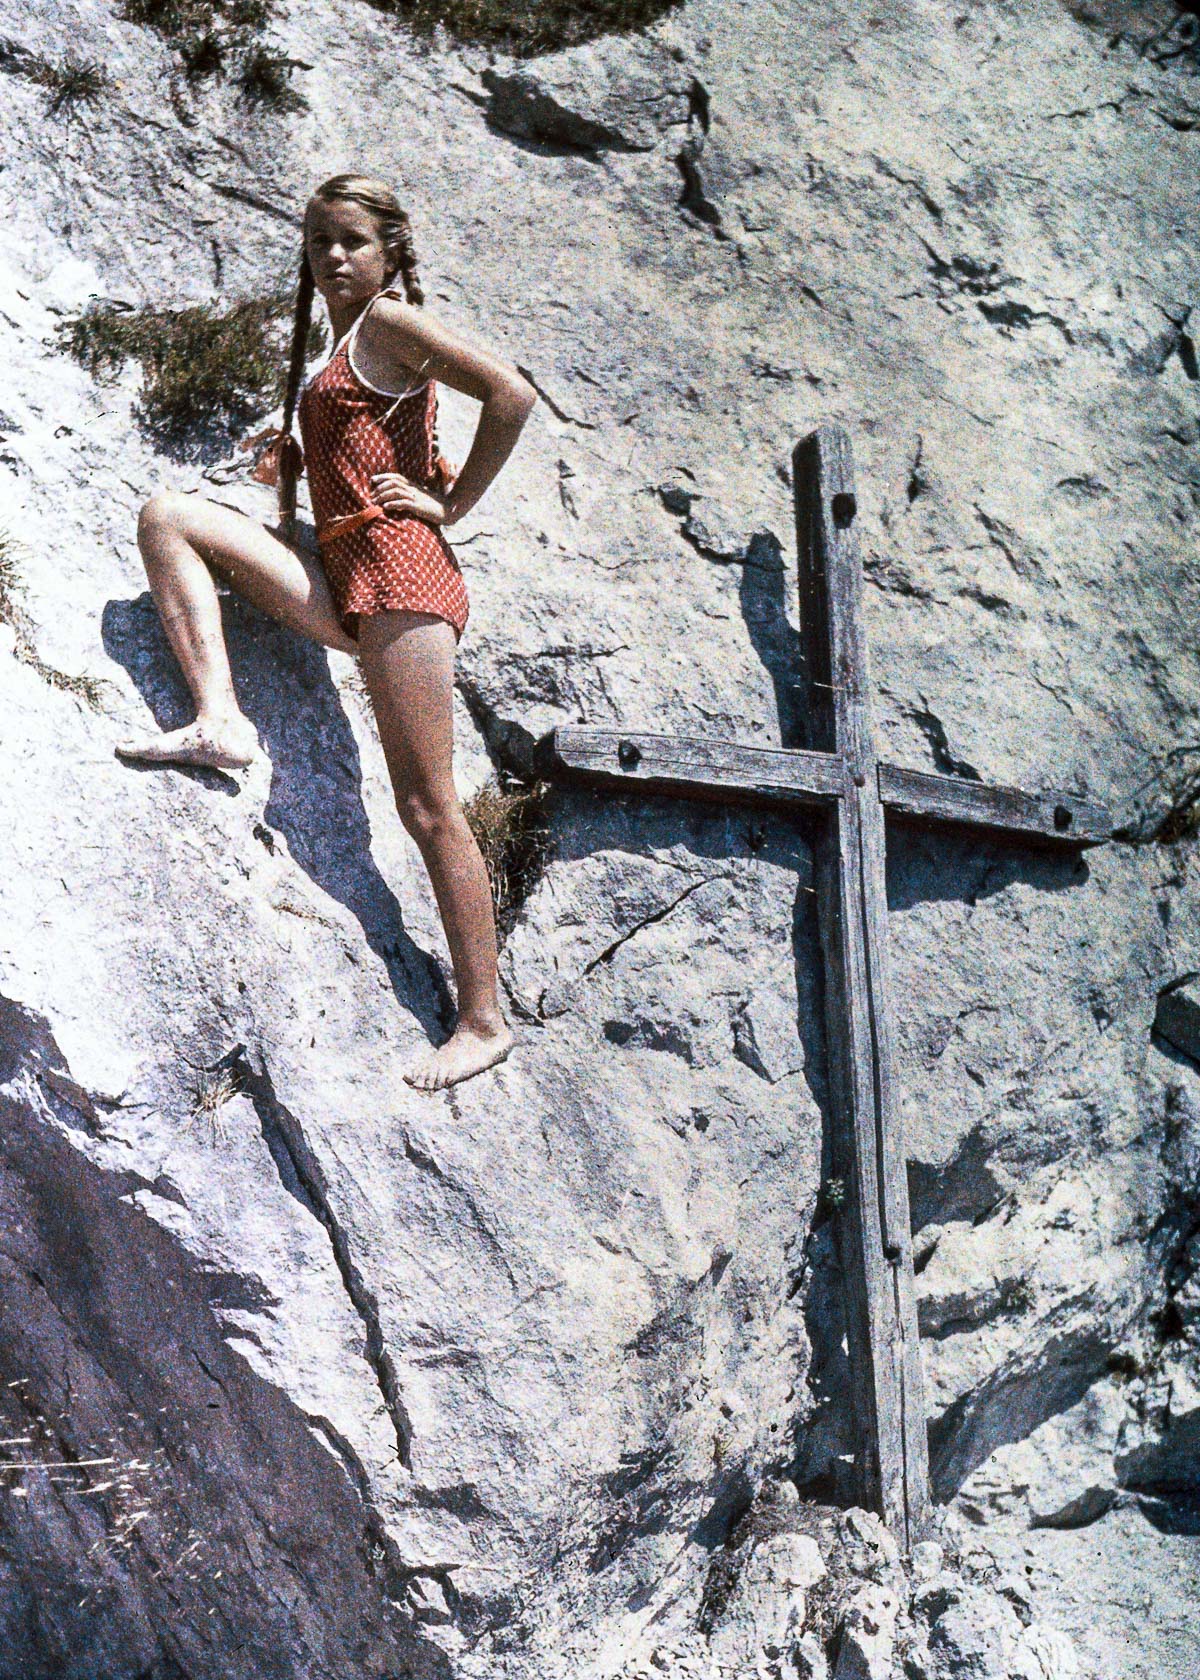 Eva climbing a rock face, Lake Luzern, Switzerland.c. 1927